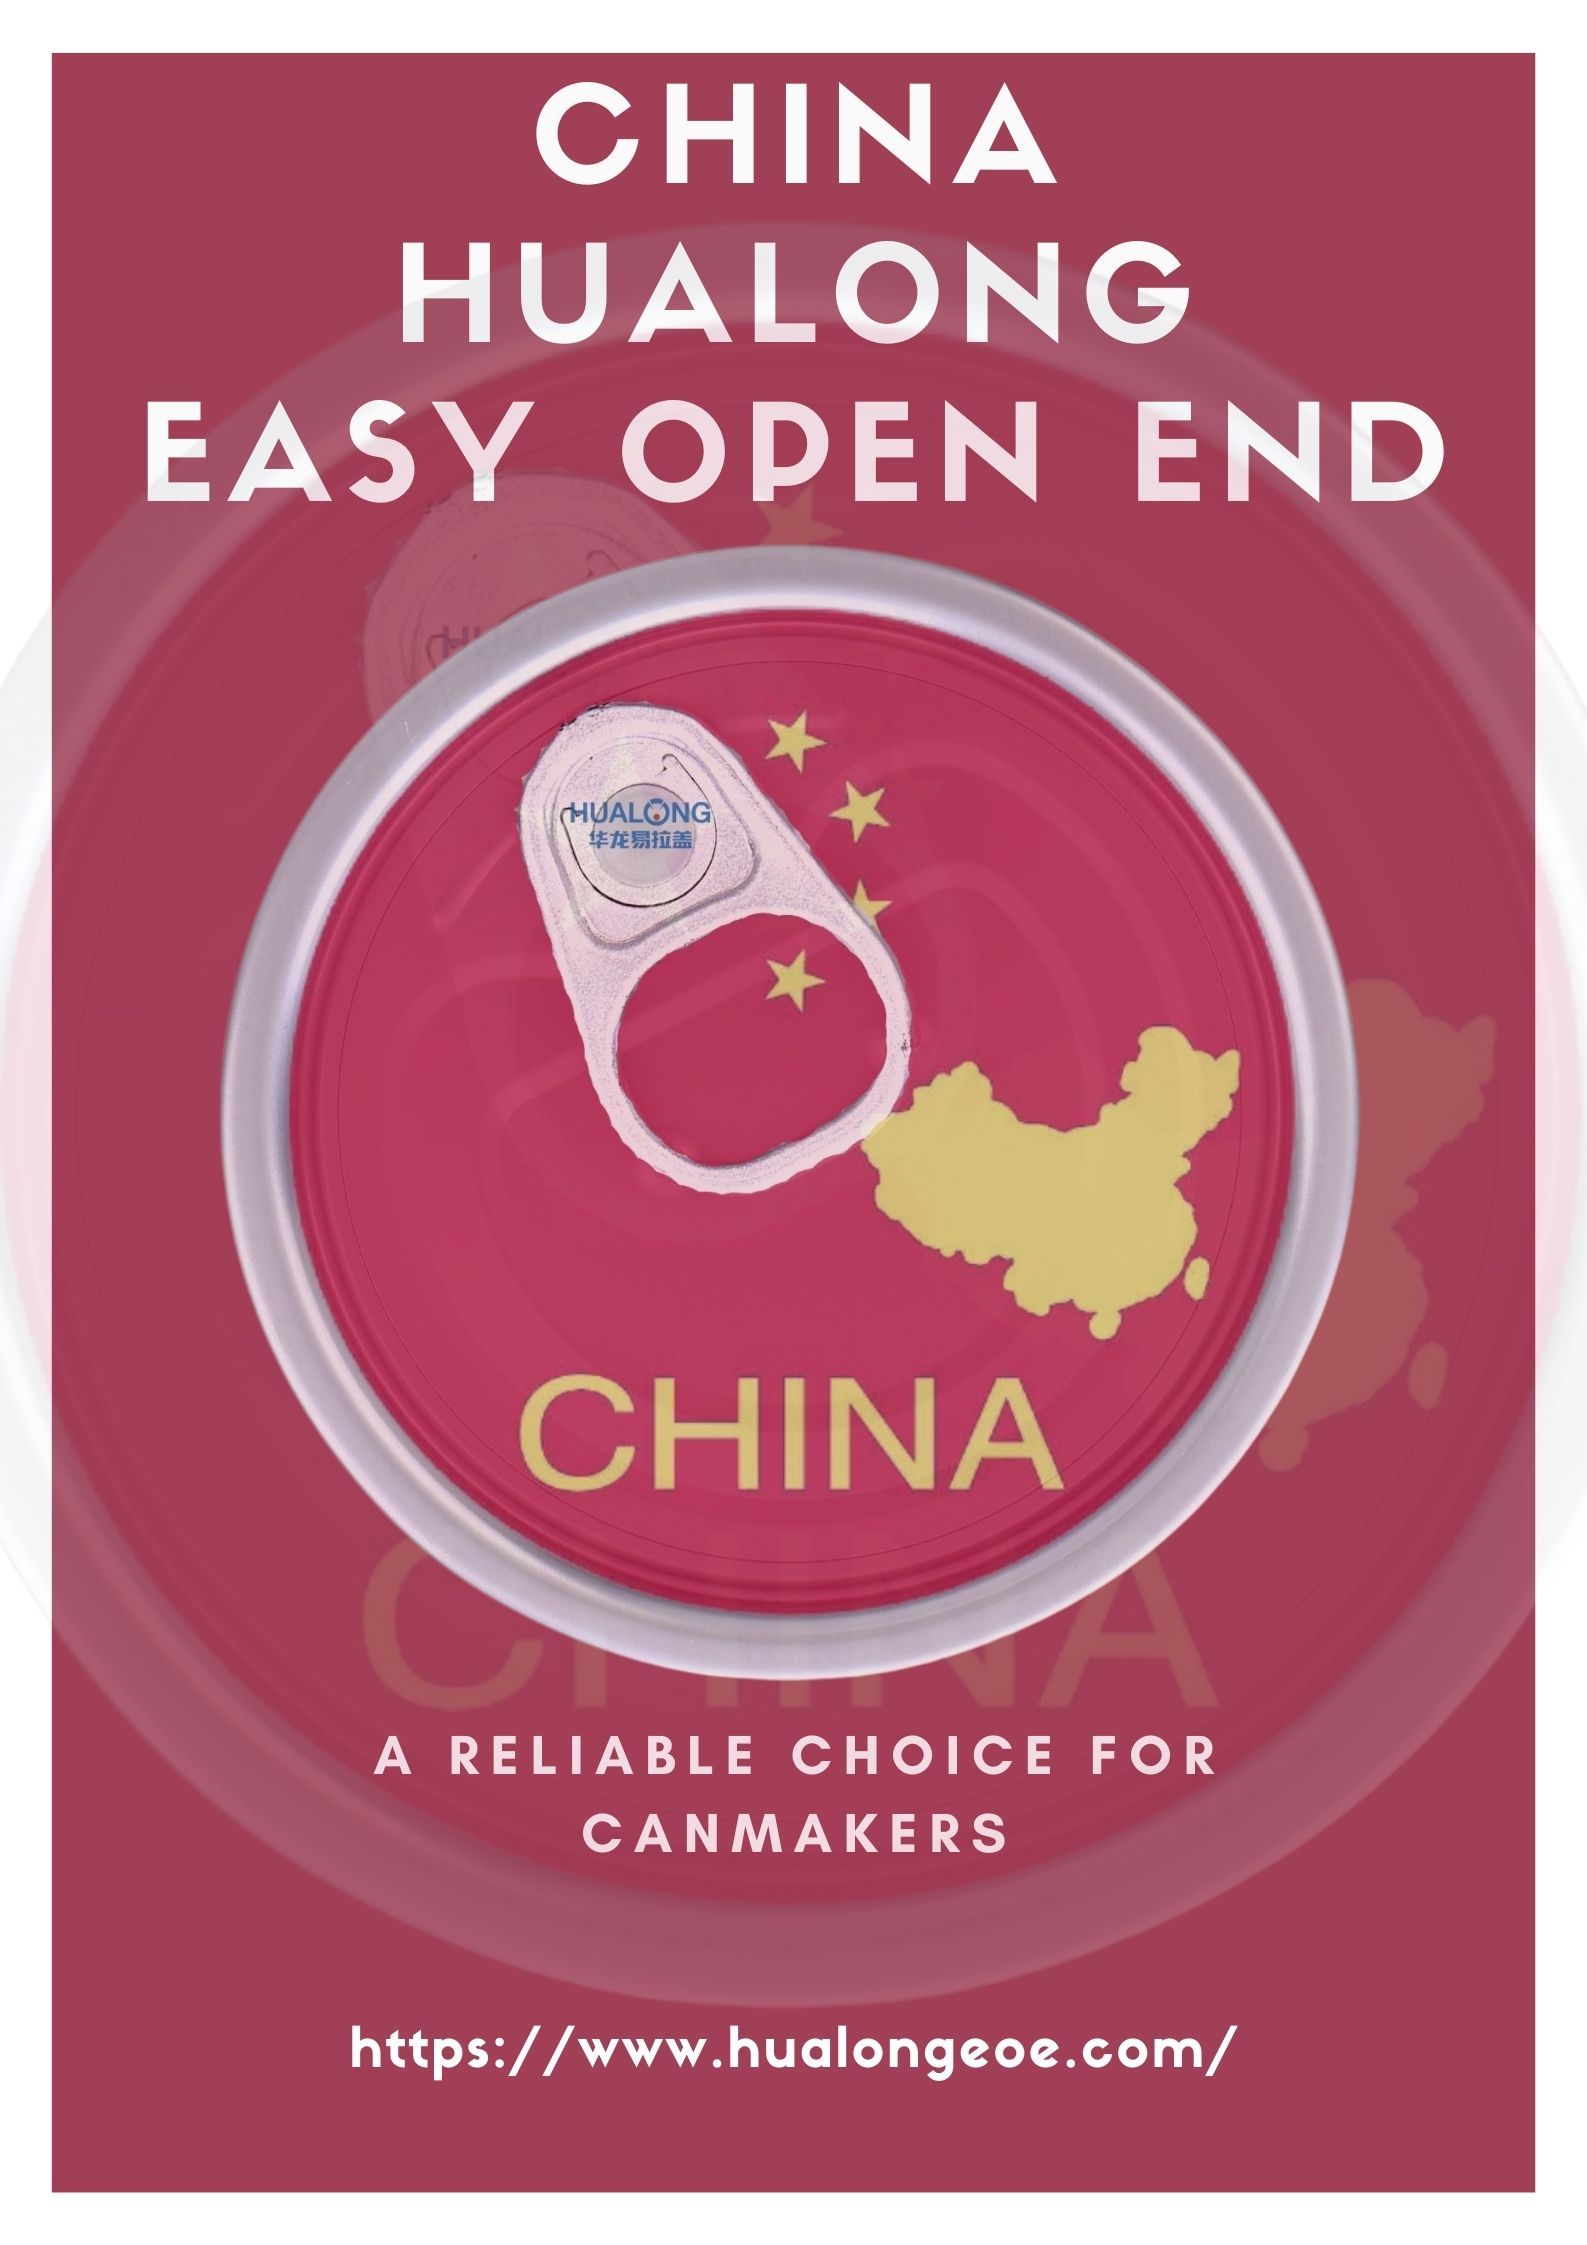 Hualong Easy Open End: Canmakers üçün Etibarlı Seçim